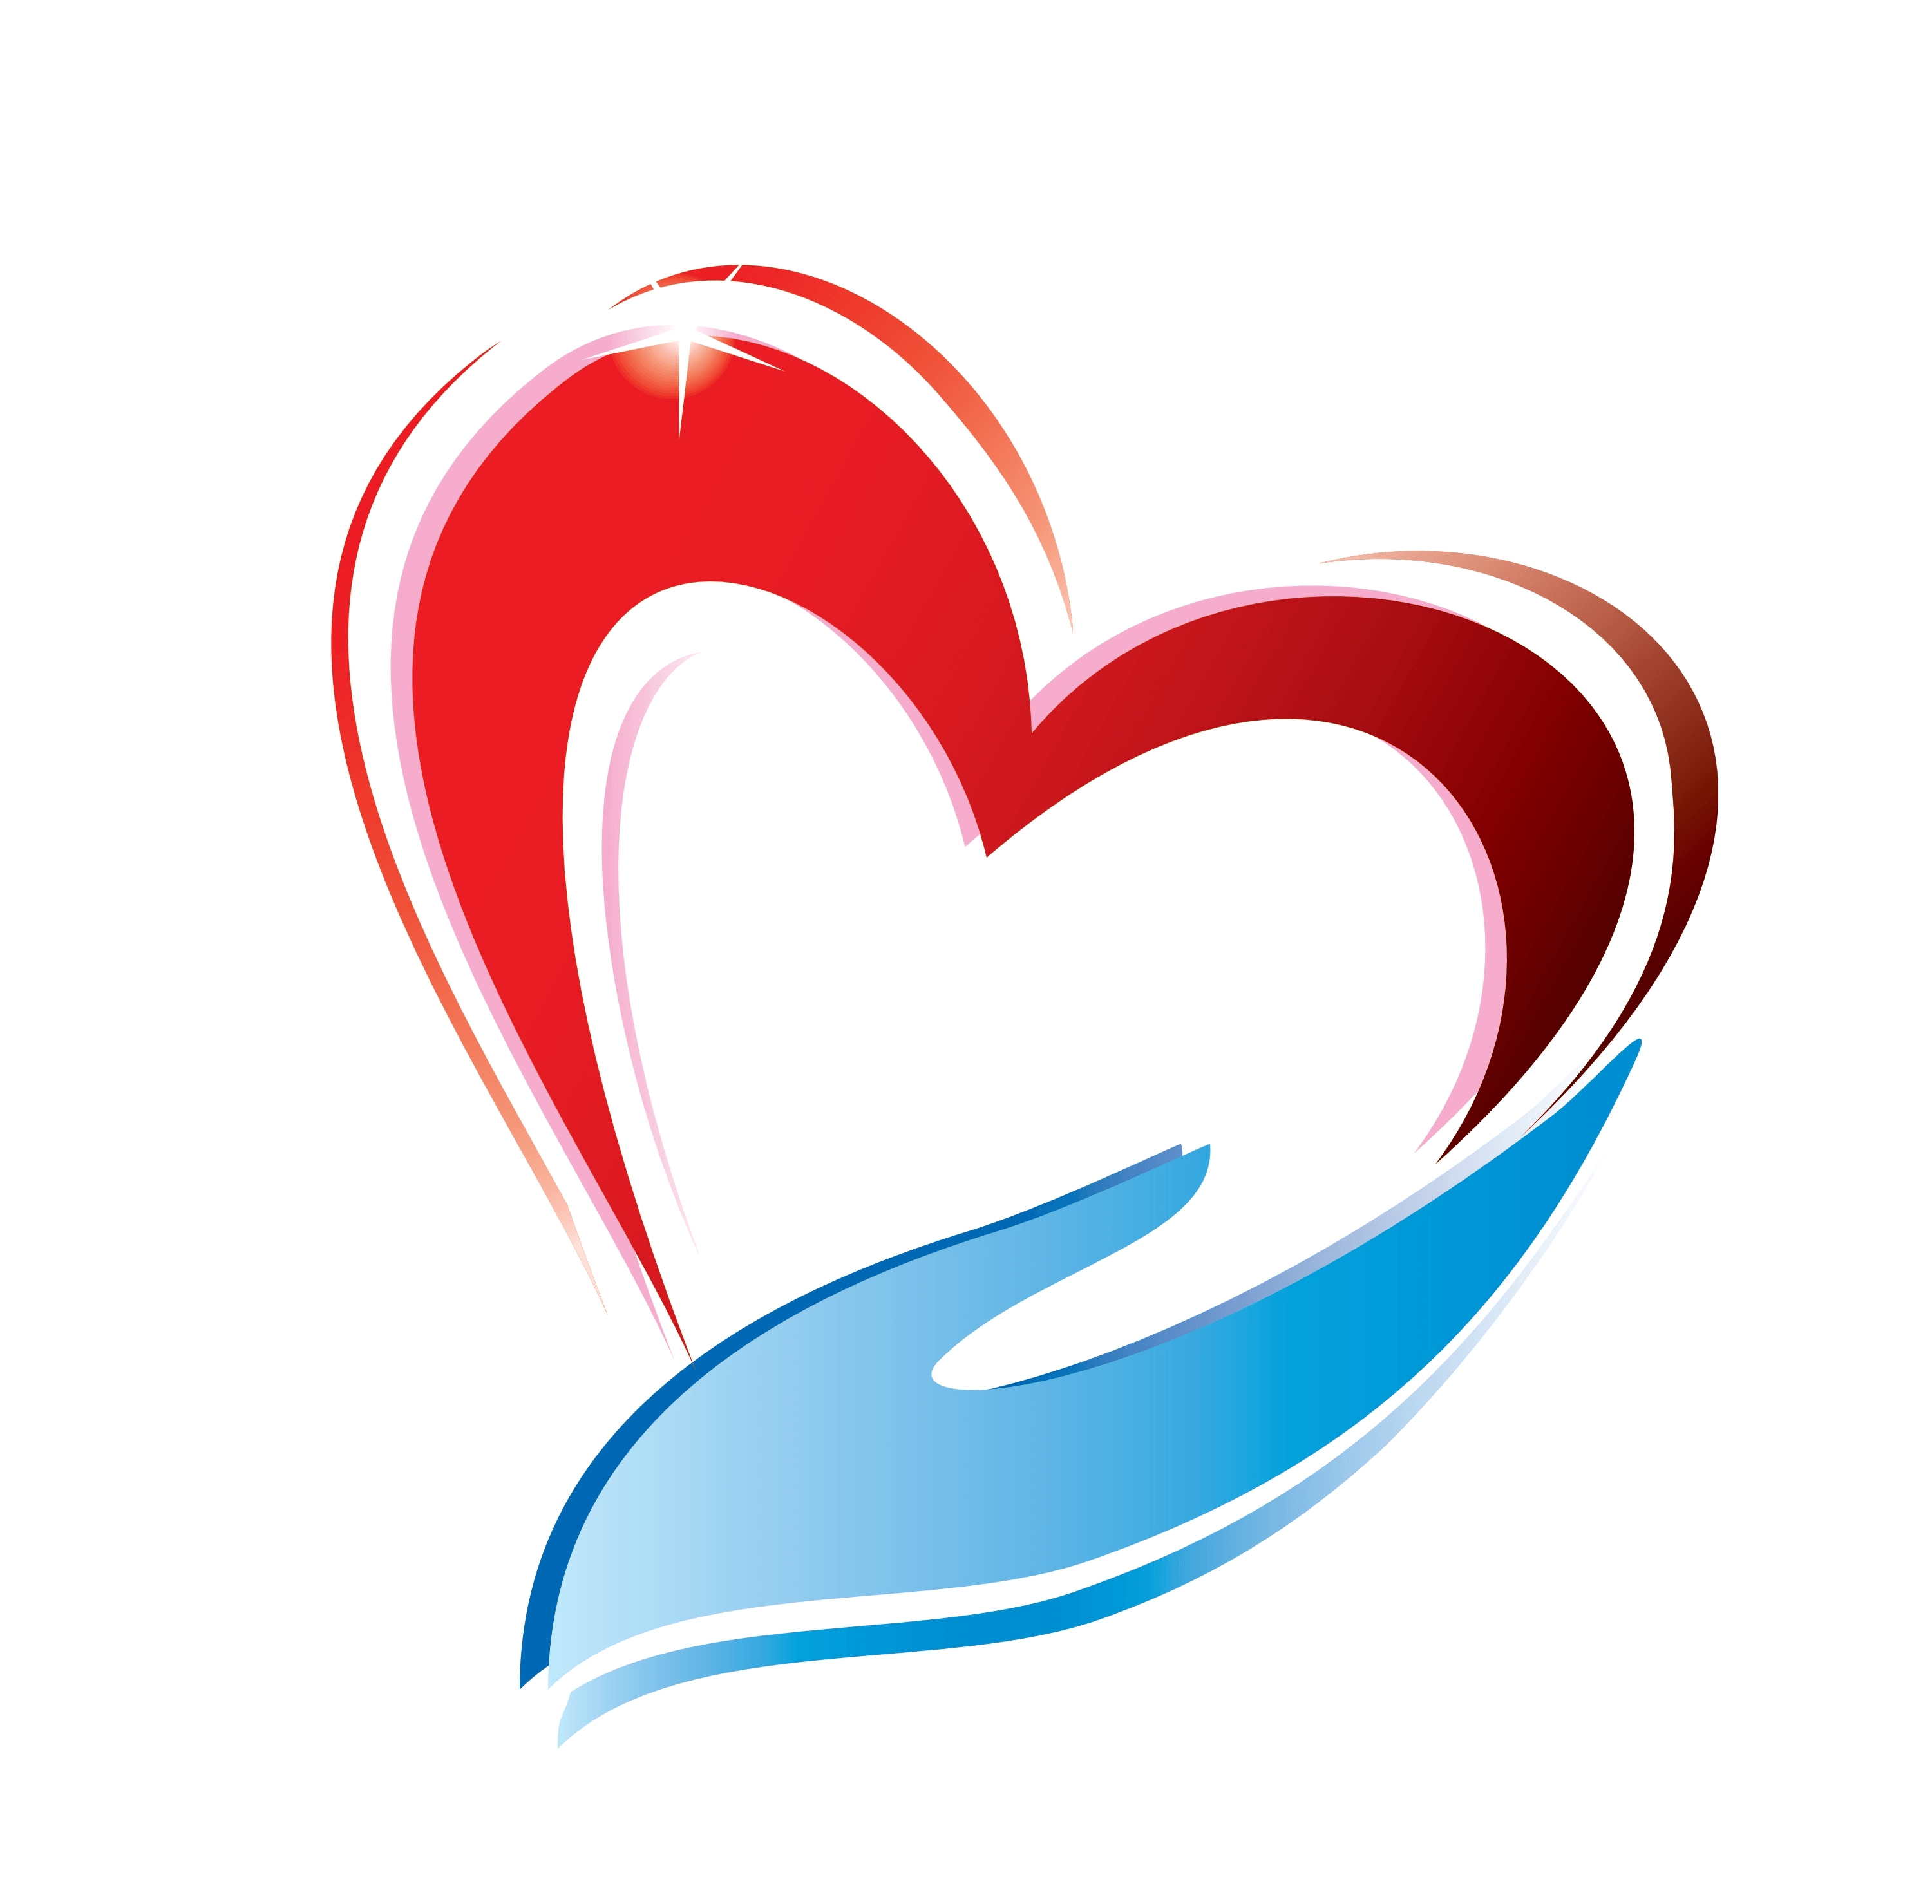 Red Heart Hands Logo - Pin by Marinka Willig on Hearts | Pinterest | Heart, Heart logo and ...